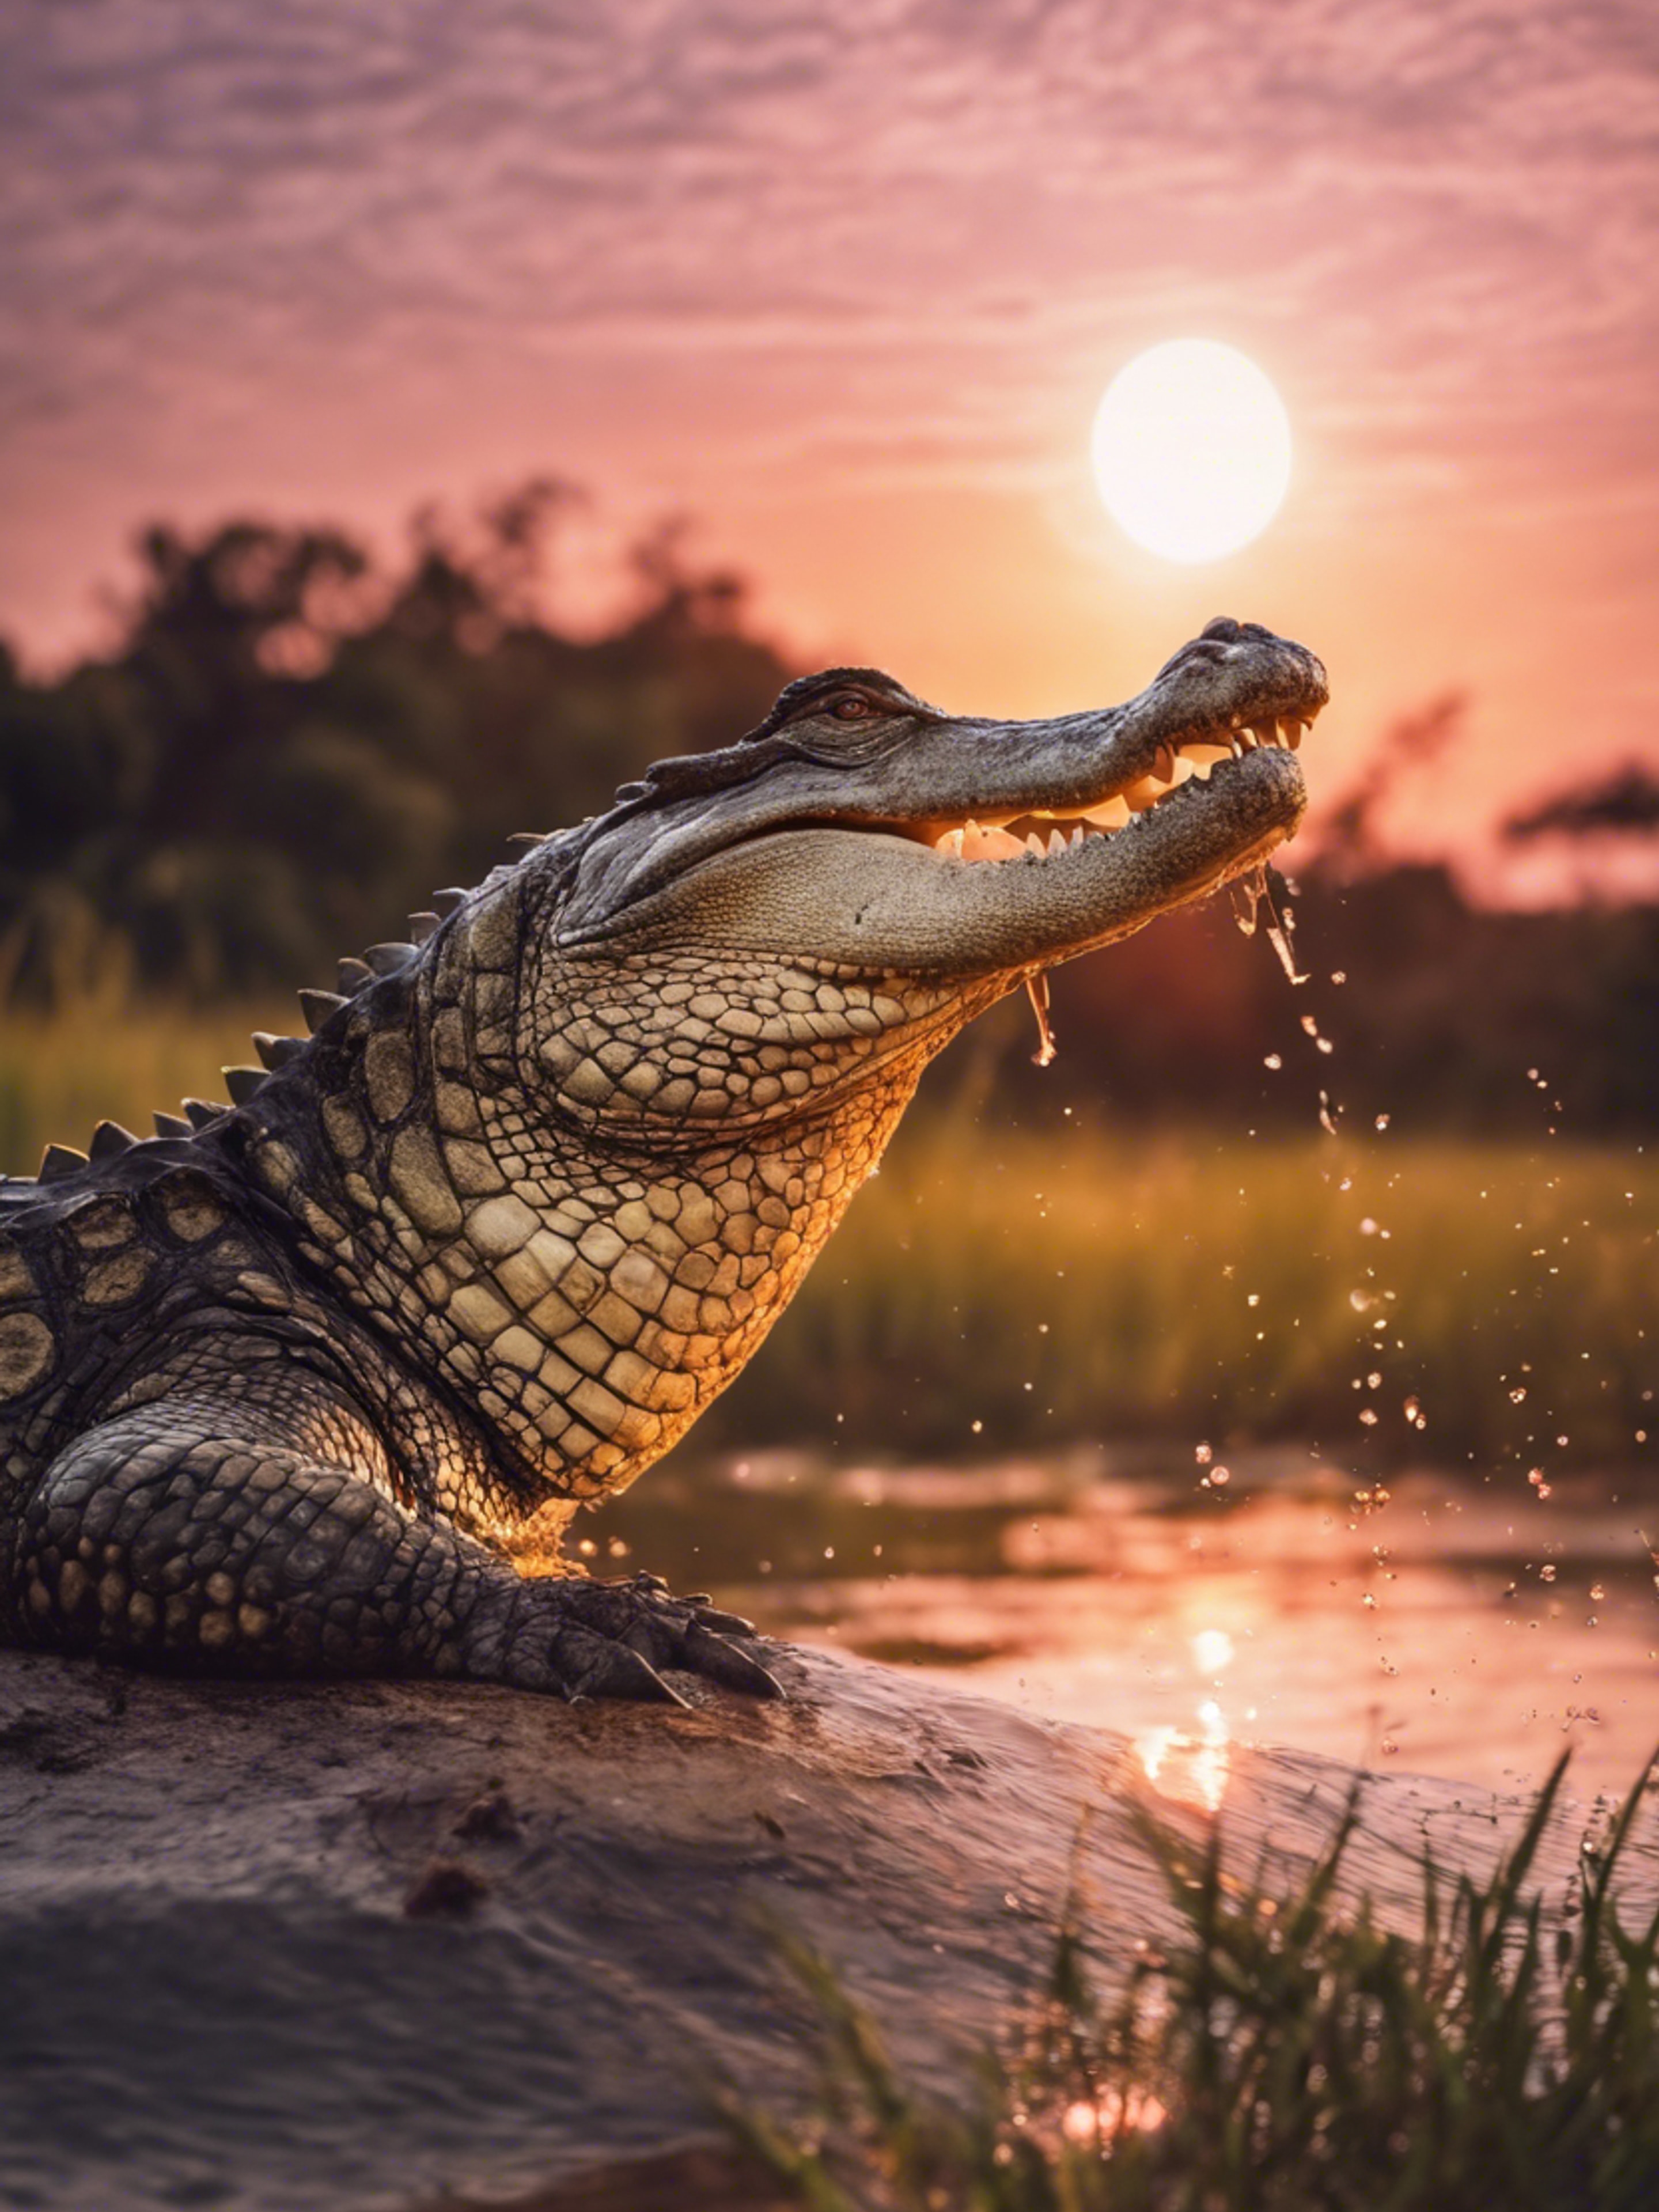 A beautiful sunrise with a crocodile breaking the surface under a rosy sky. Tapet[8e947b6adb0246b9980f]